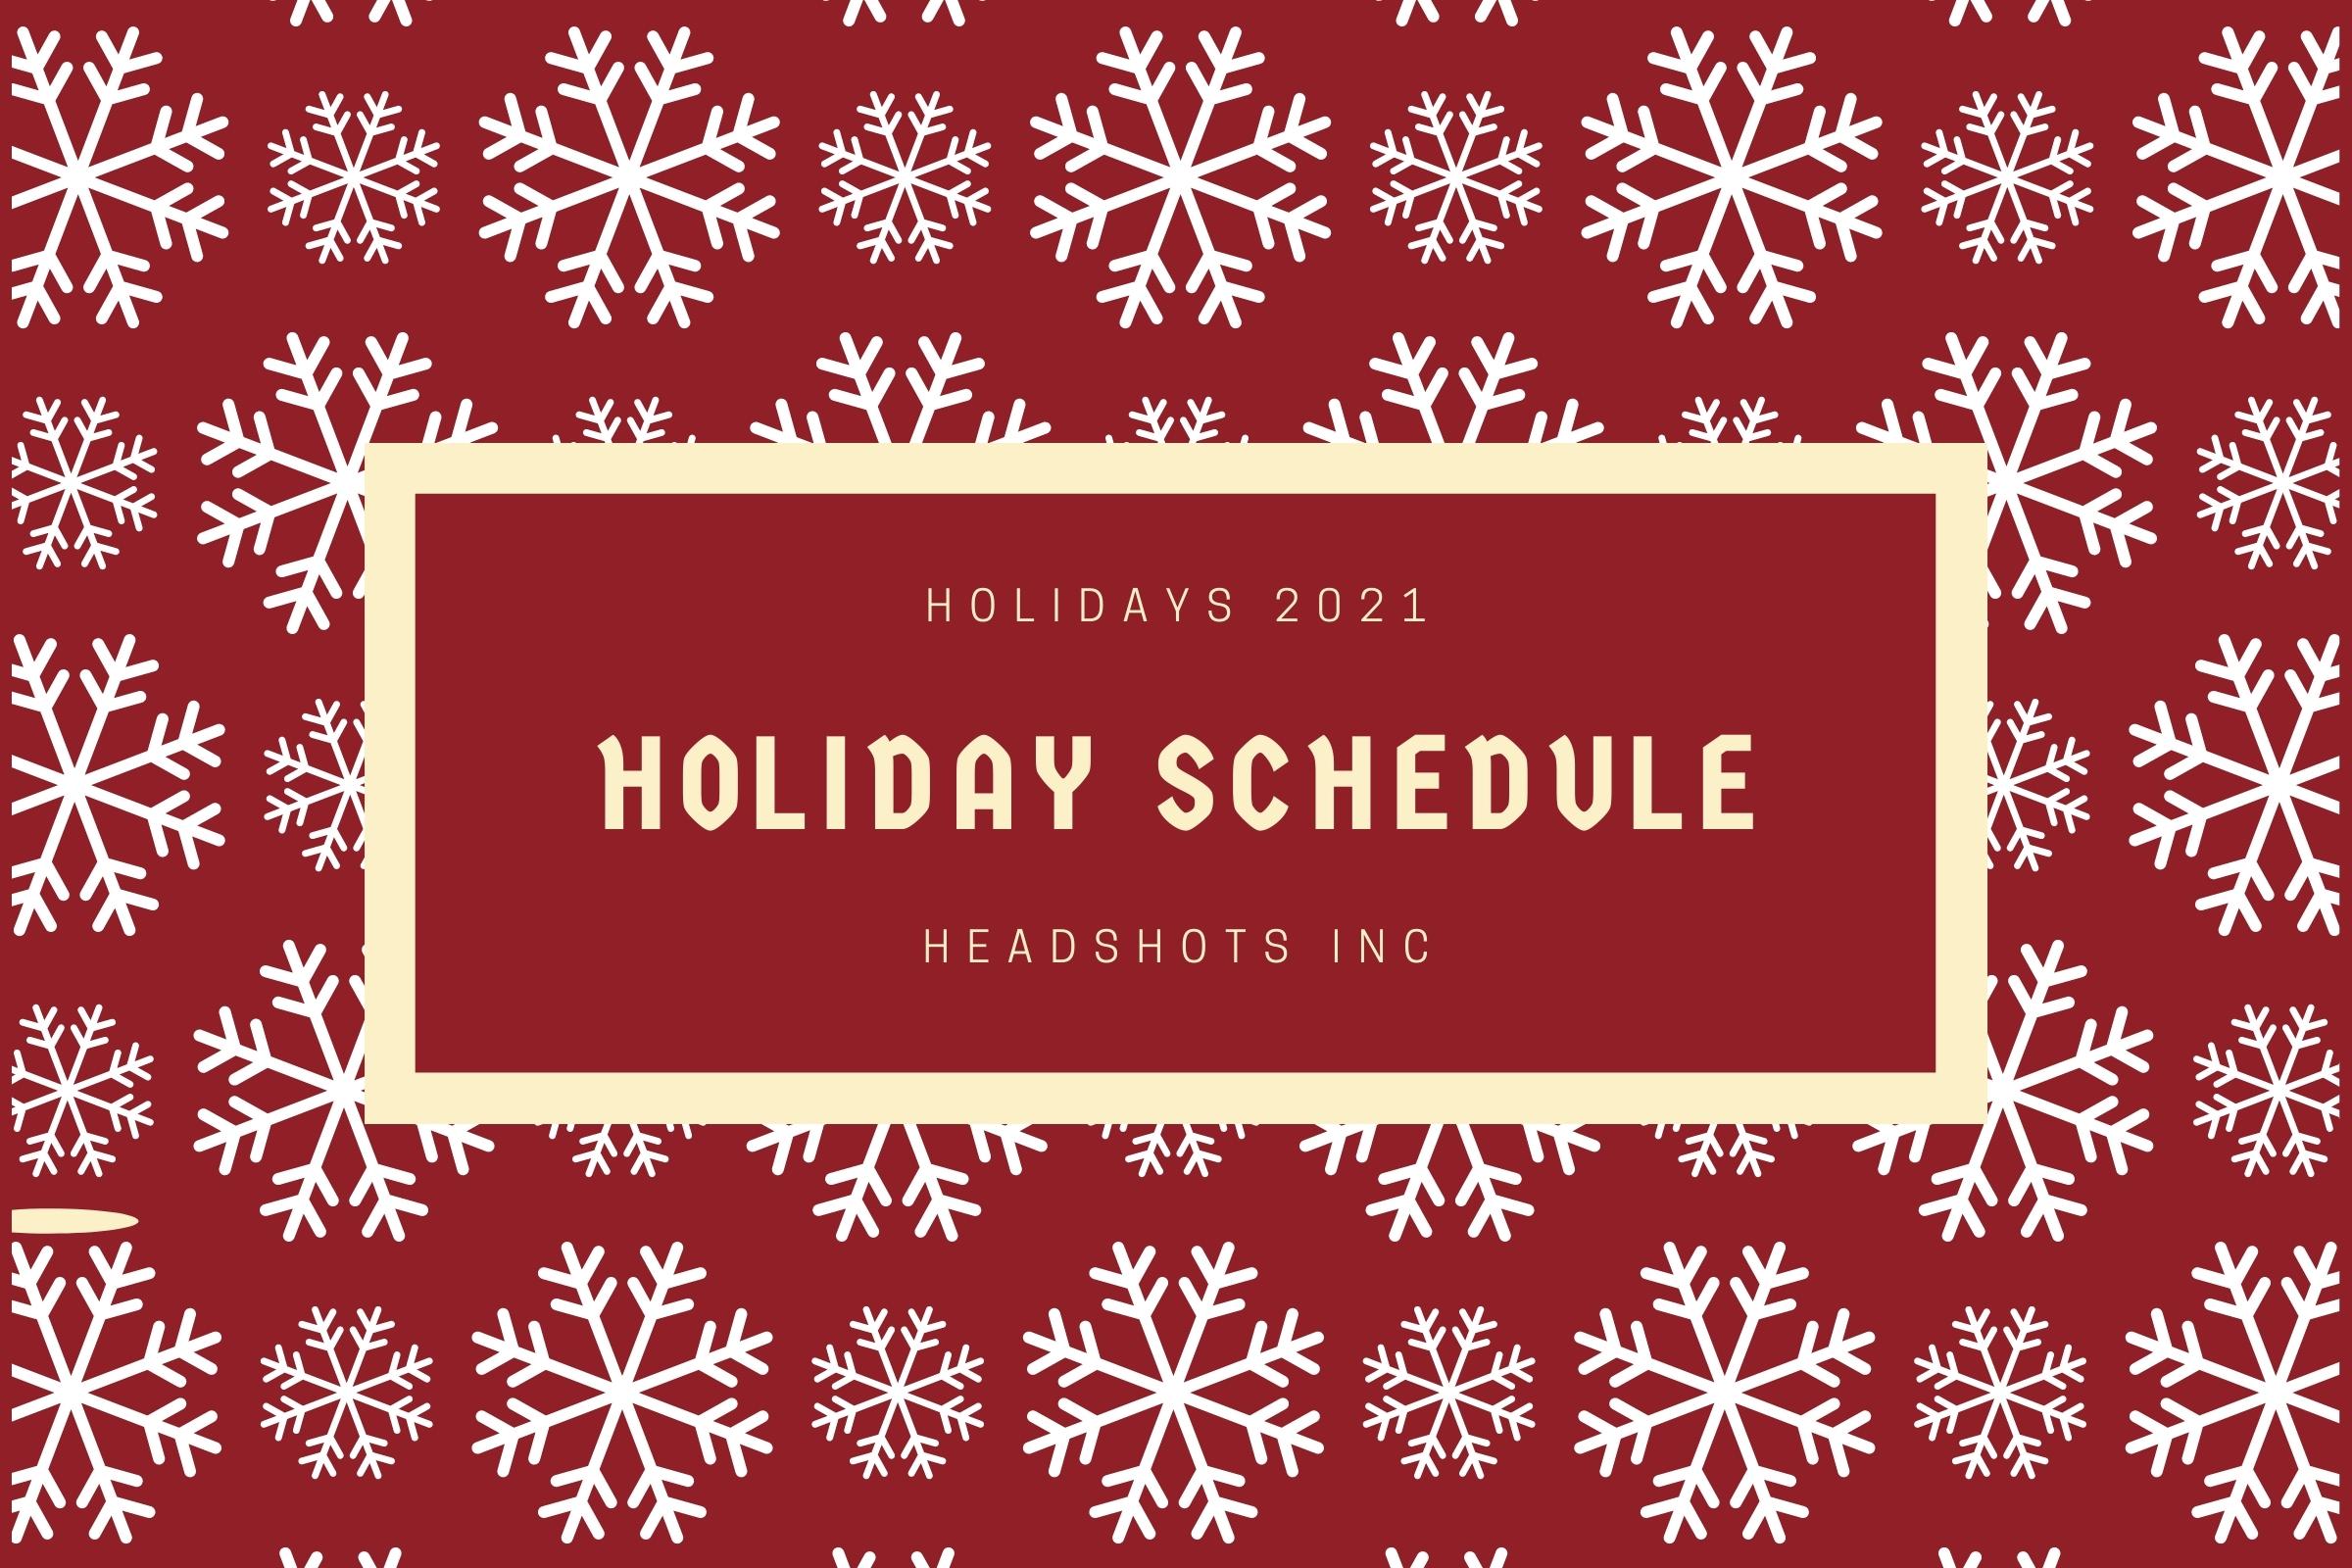 headshots inc holiday schedule 2021